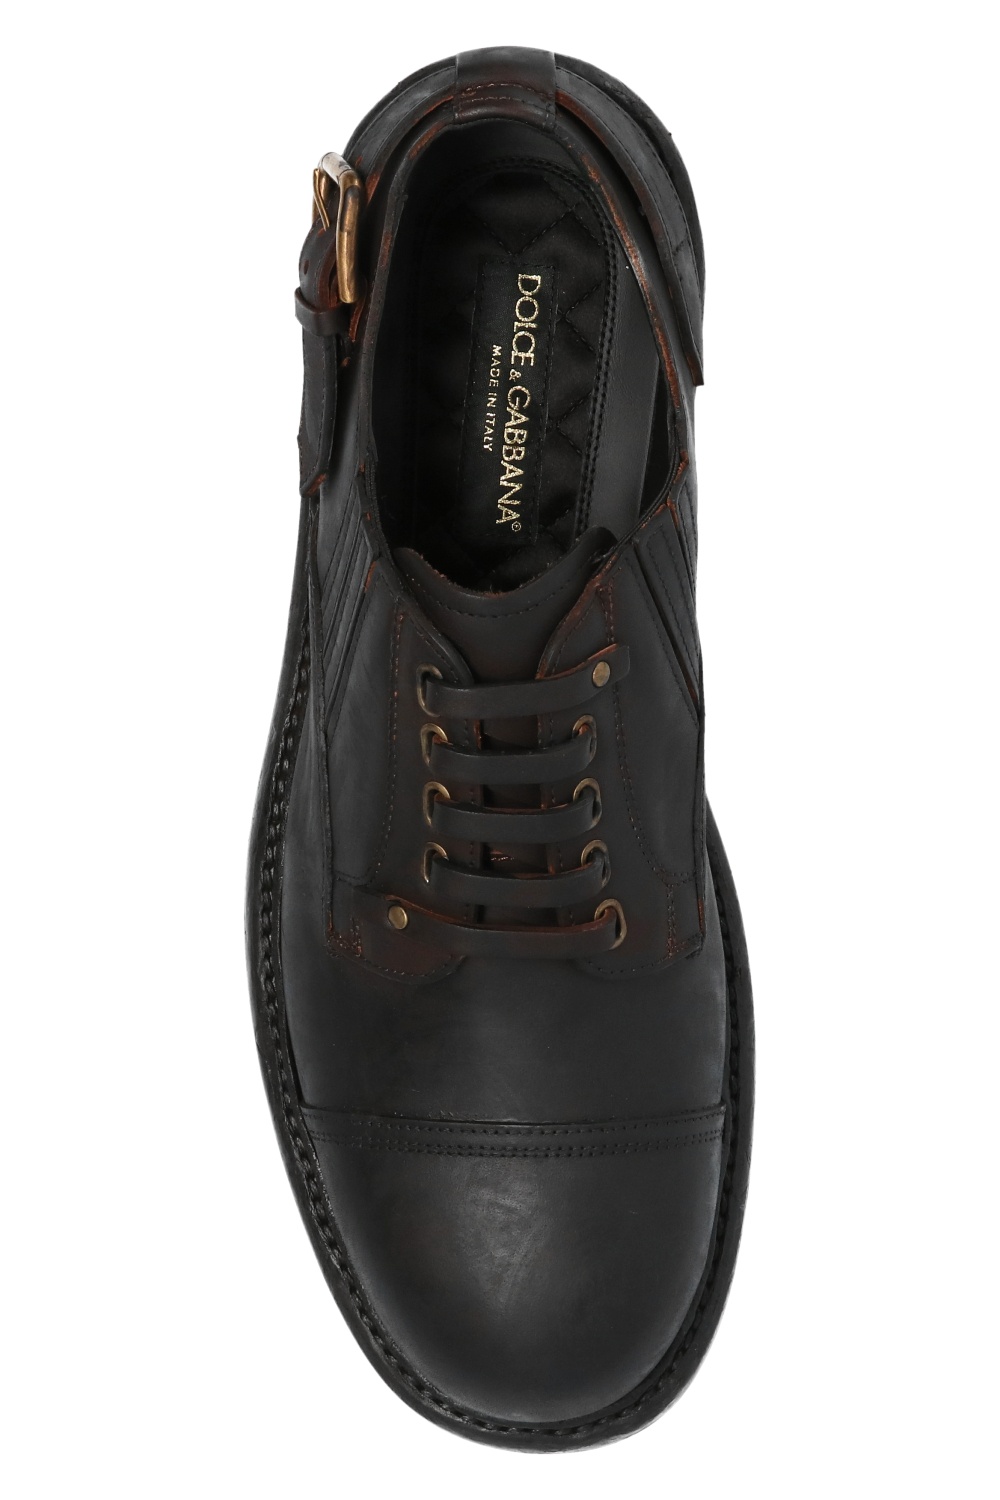 Dolce & Gabbana Derby shoes